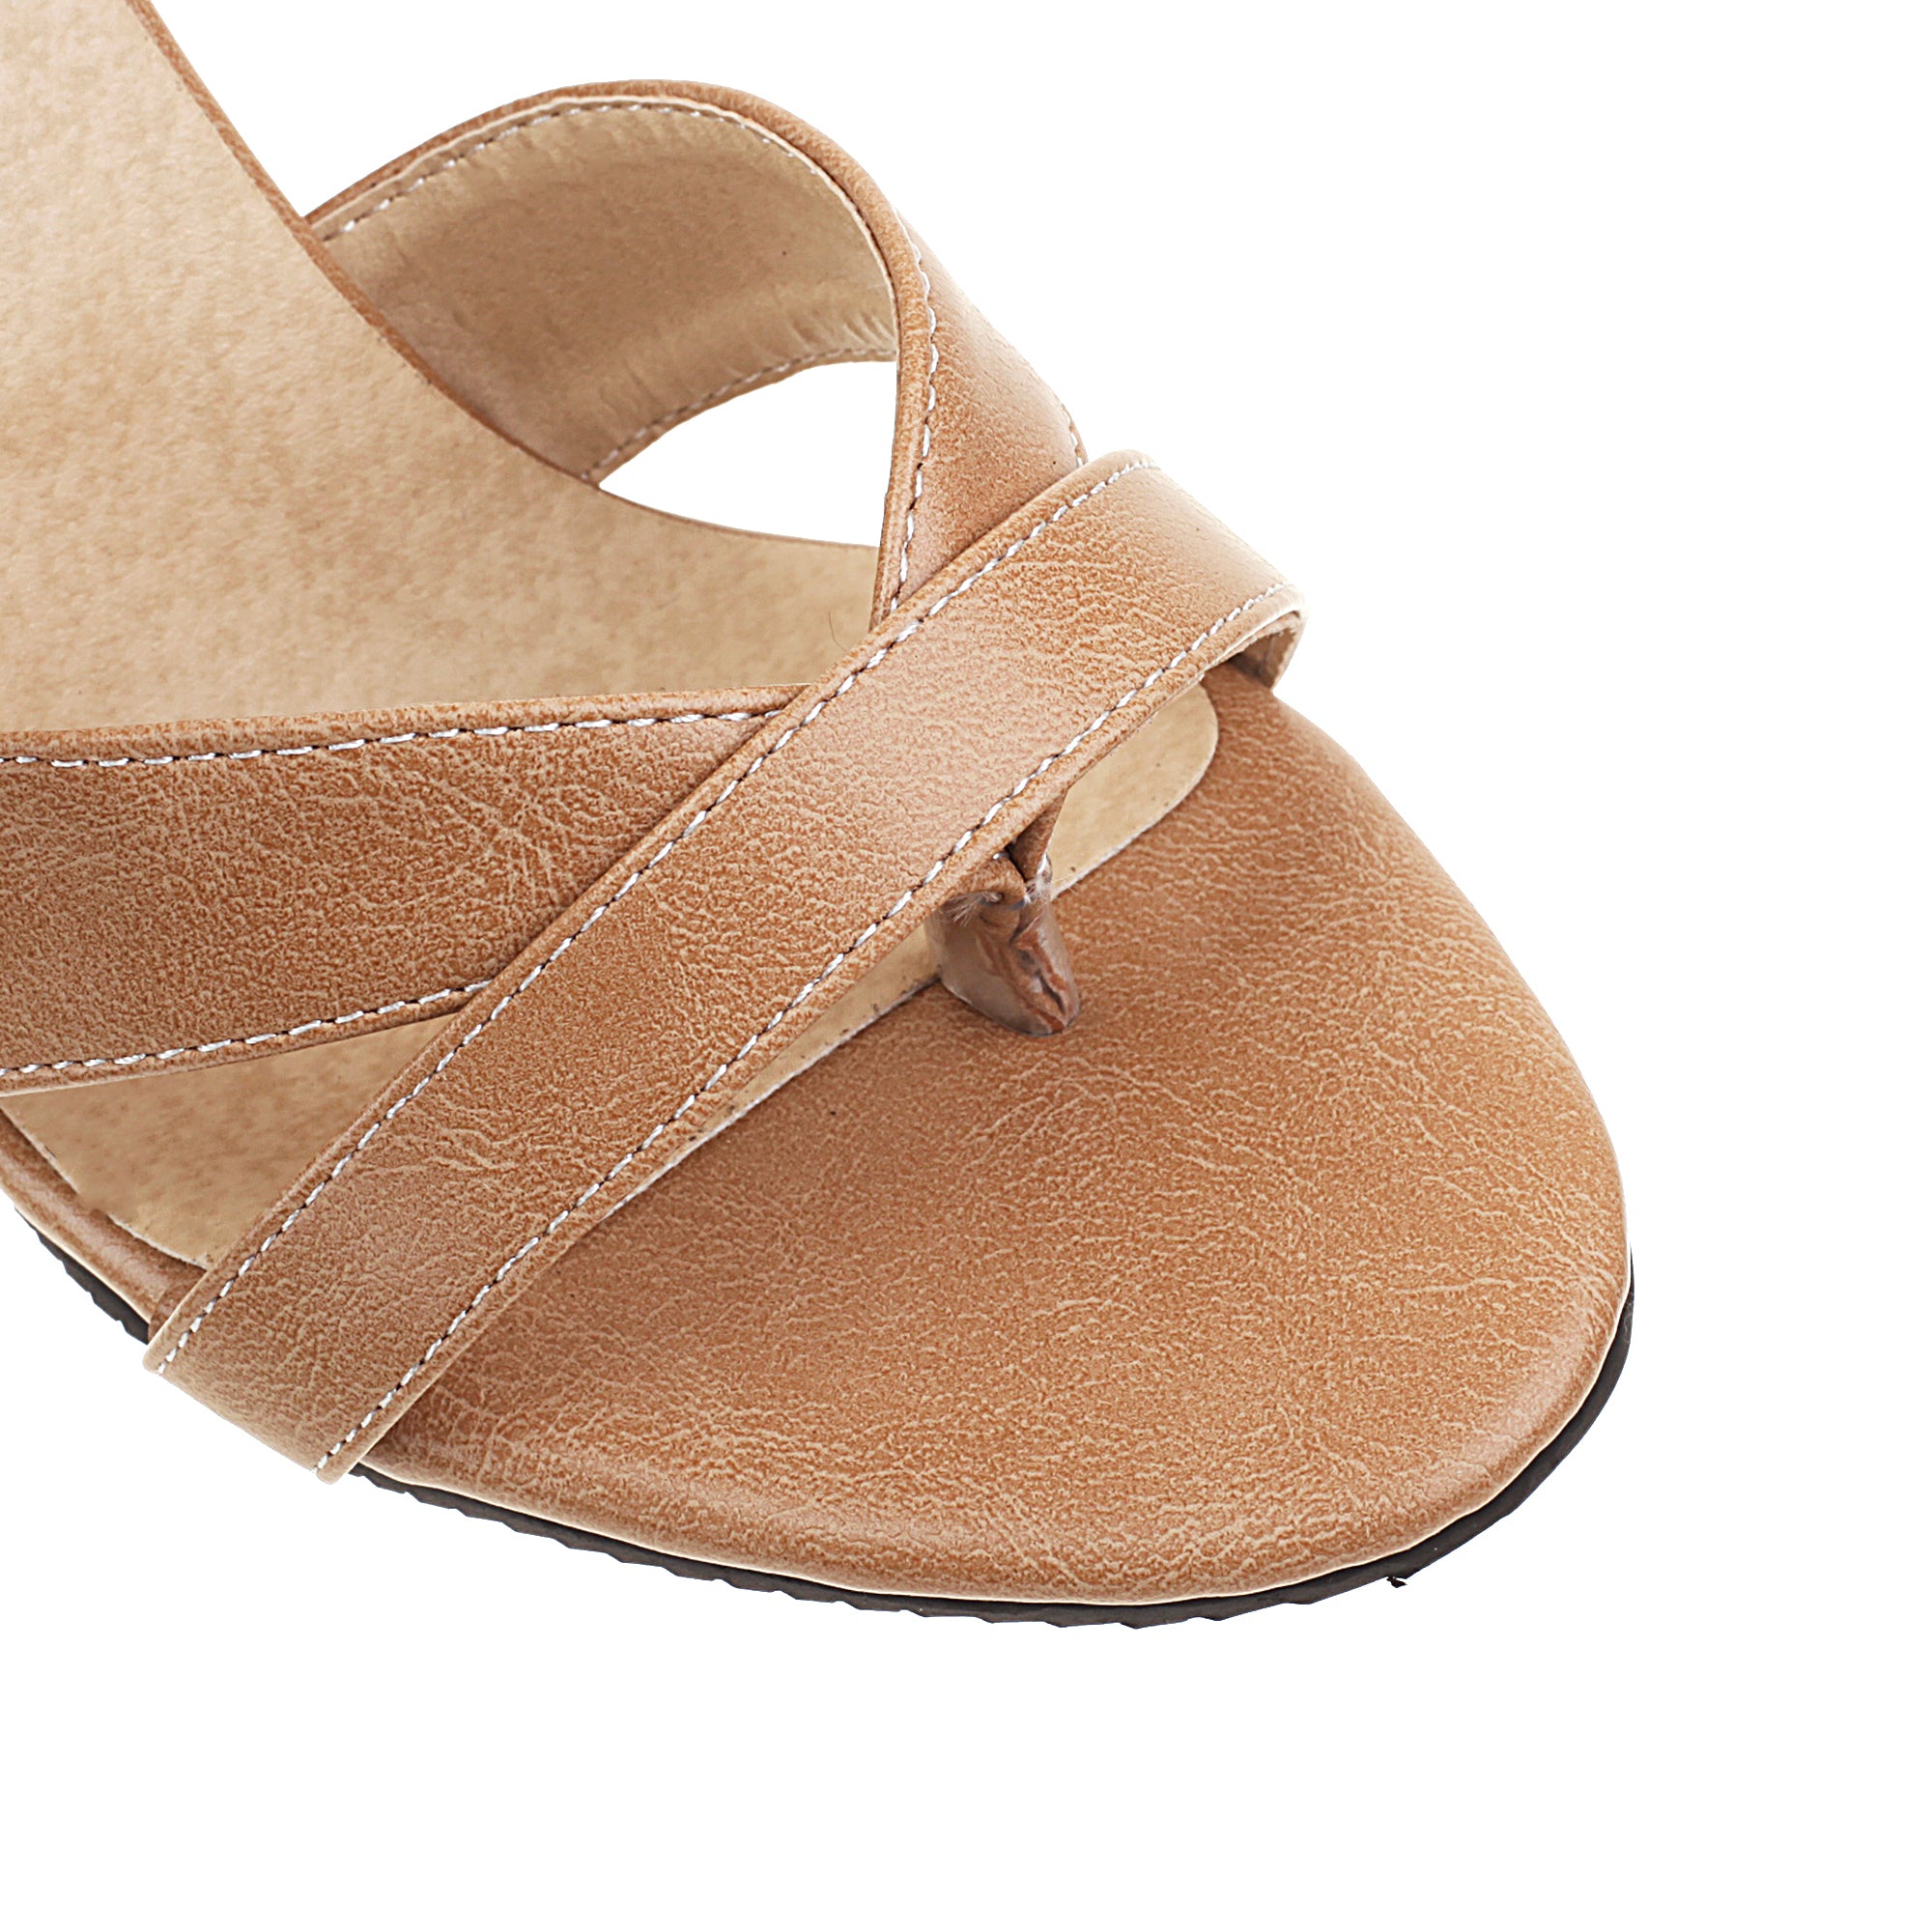 Bigsizeheels Stiletto Pointed Toe Ankle Strap Sandals - Brown best oversized womens heels are from bigsizeheel®